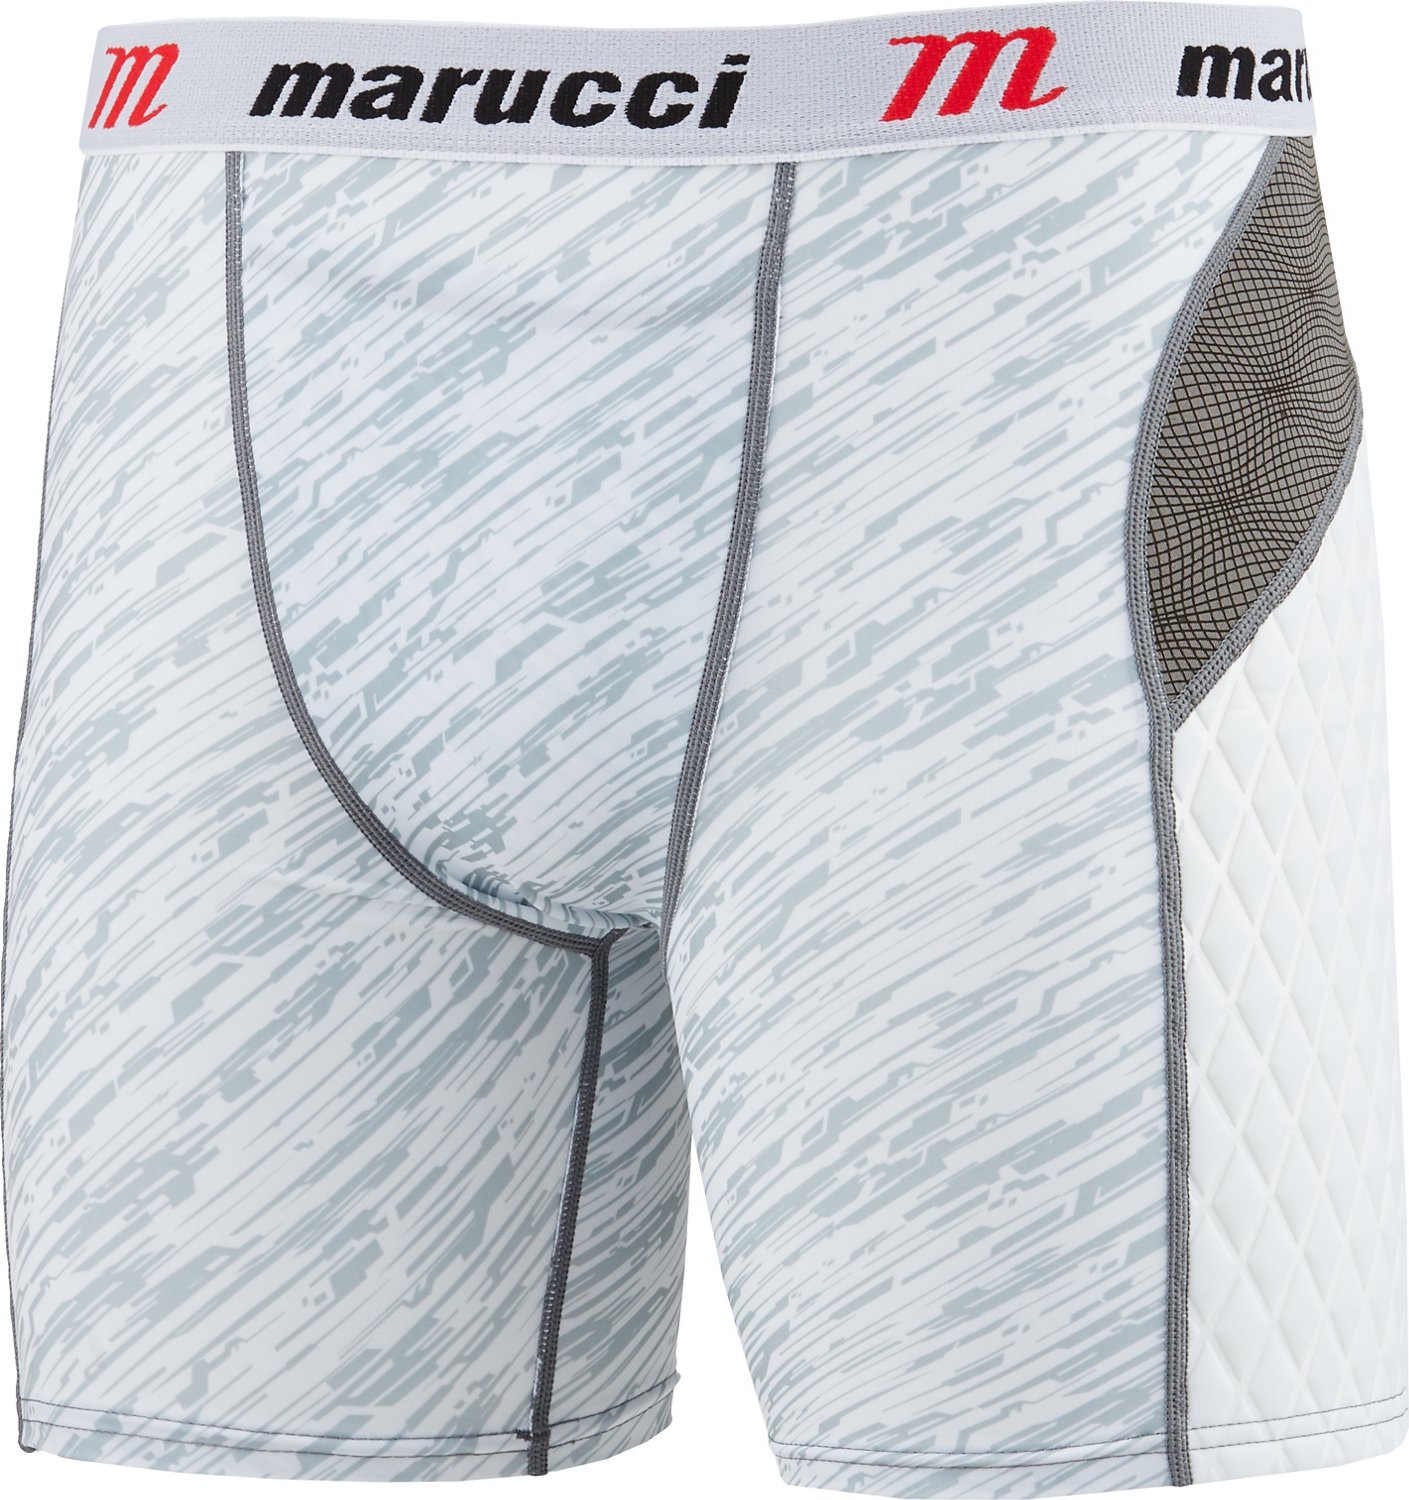 Marucci Boys' Padded Baseball Sliding Shorts w/ Cup